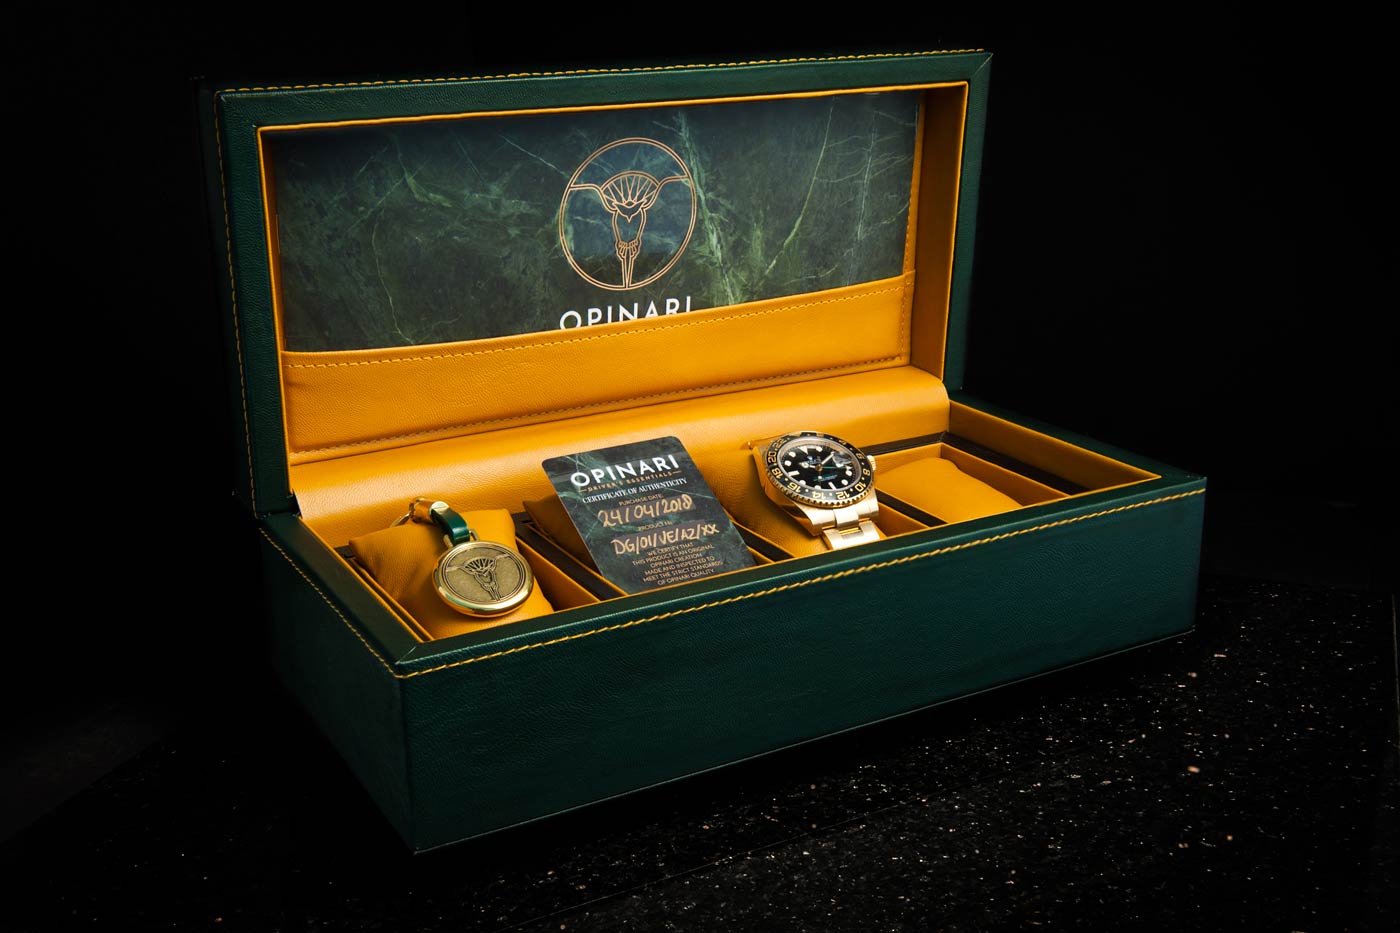 Watch box including golden rolex GMT